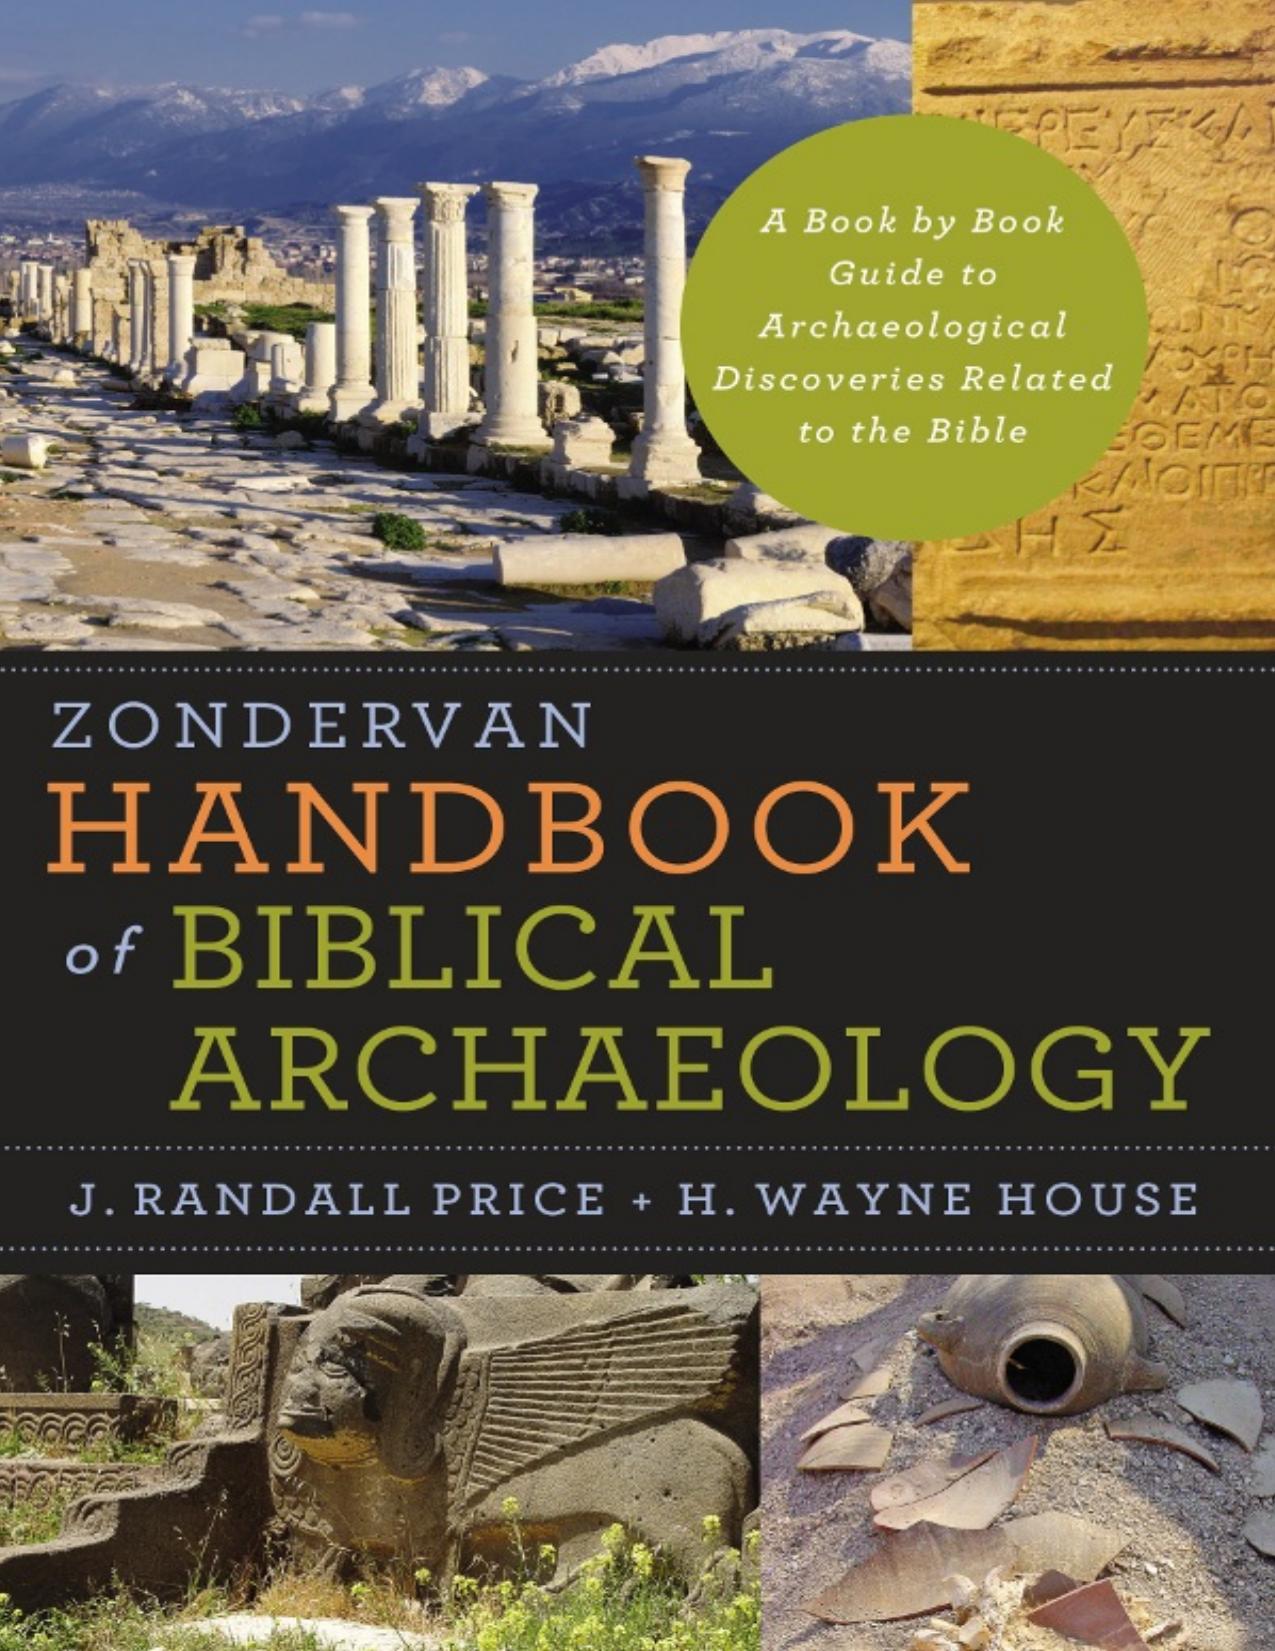 Zondervan Handbook of Biblical Archaeology - PDFDrive.com